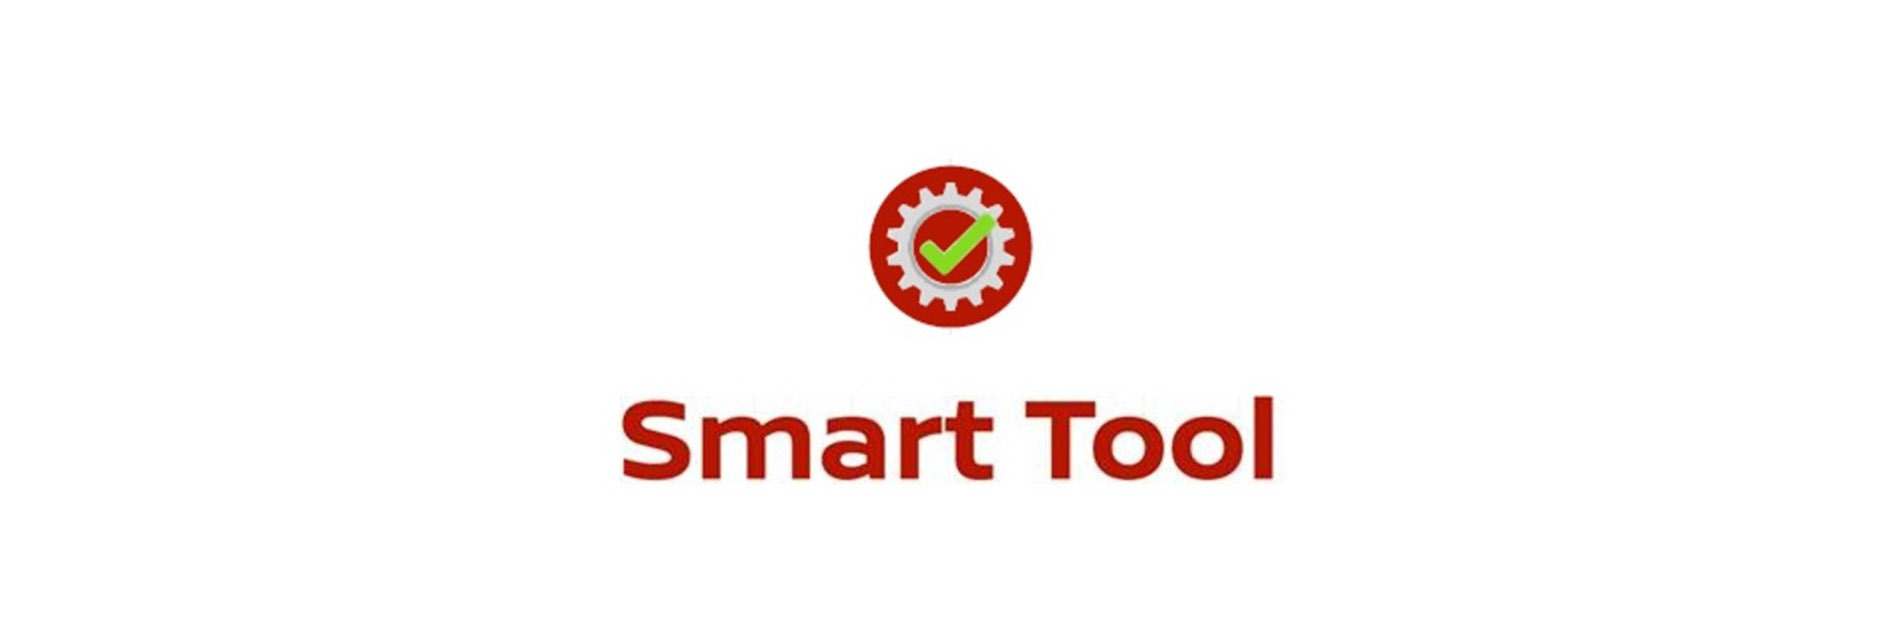 Приложение Nissan Smart Tool получило премию Global Instore Communication